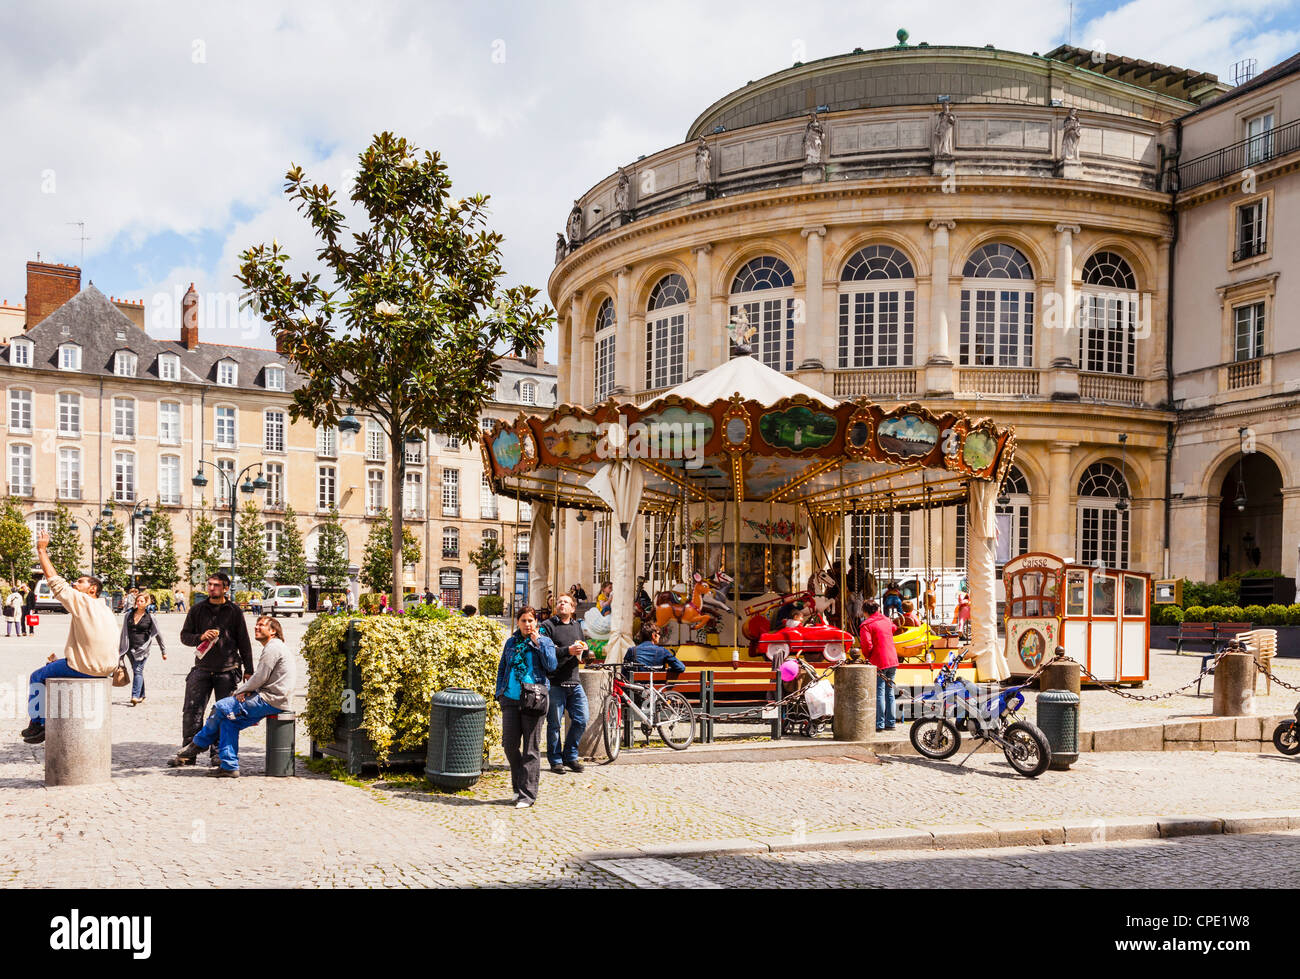 A scene in Place de la Mairie, Rennes, Brittany, France. Stock Photo